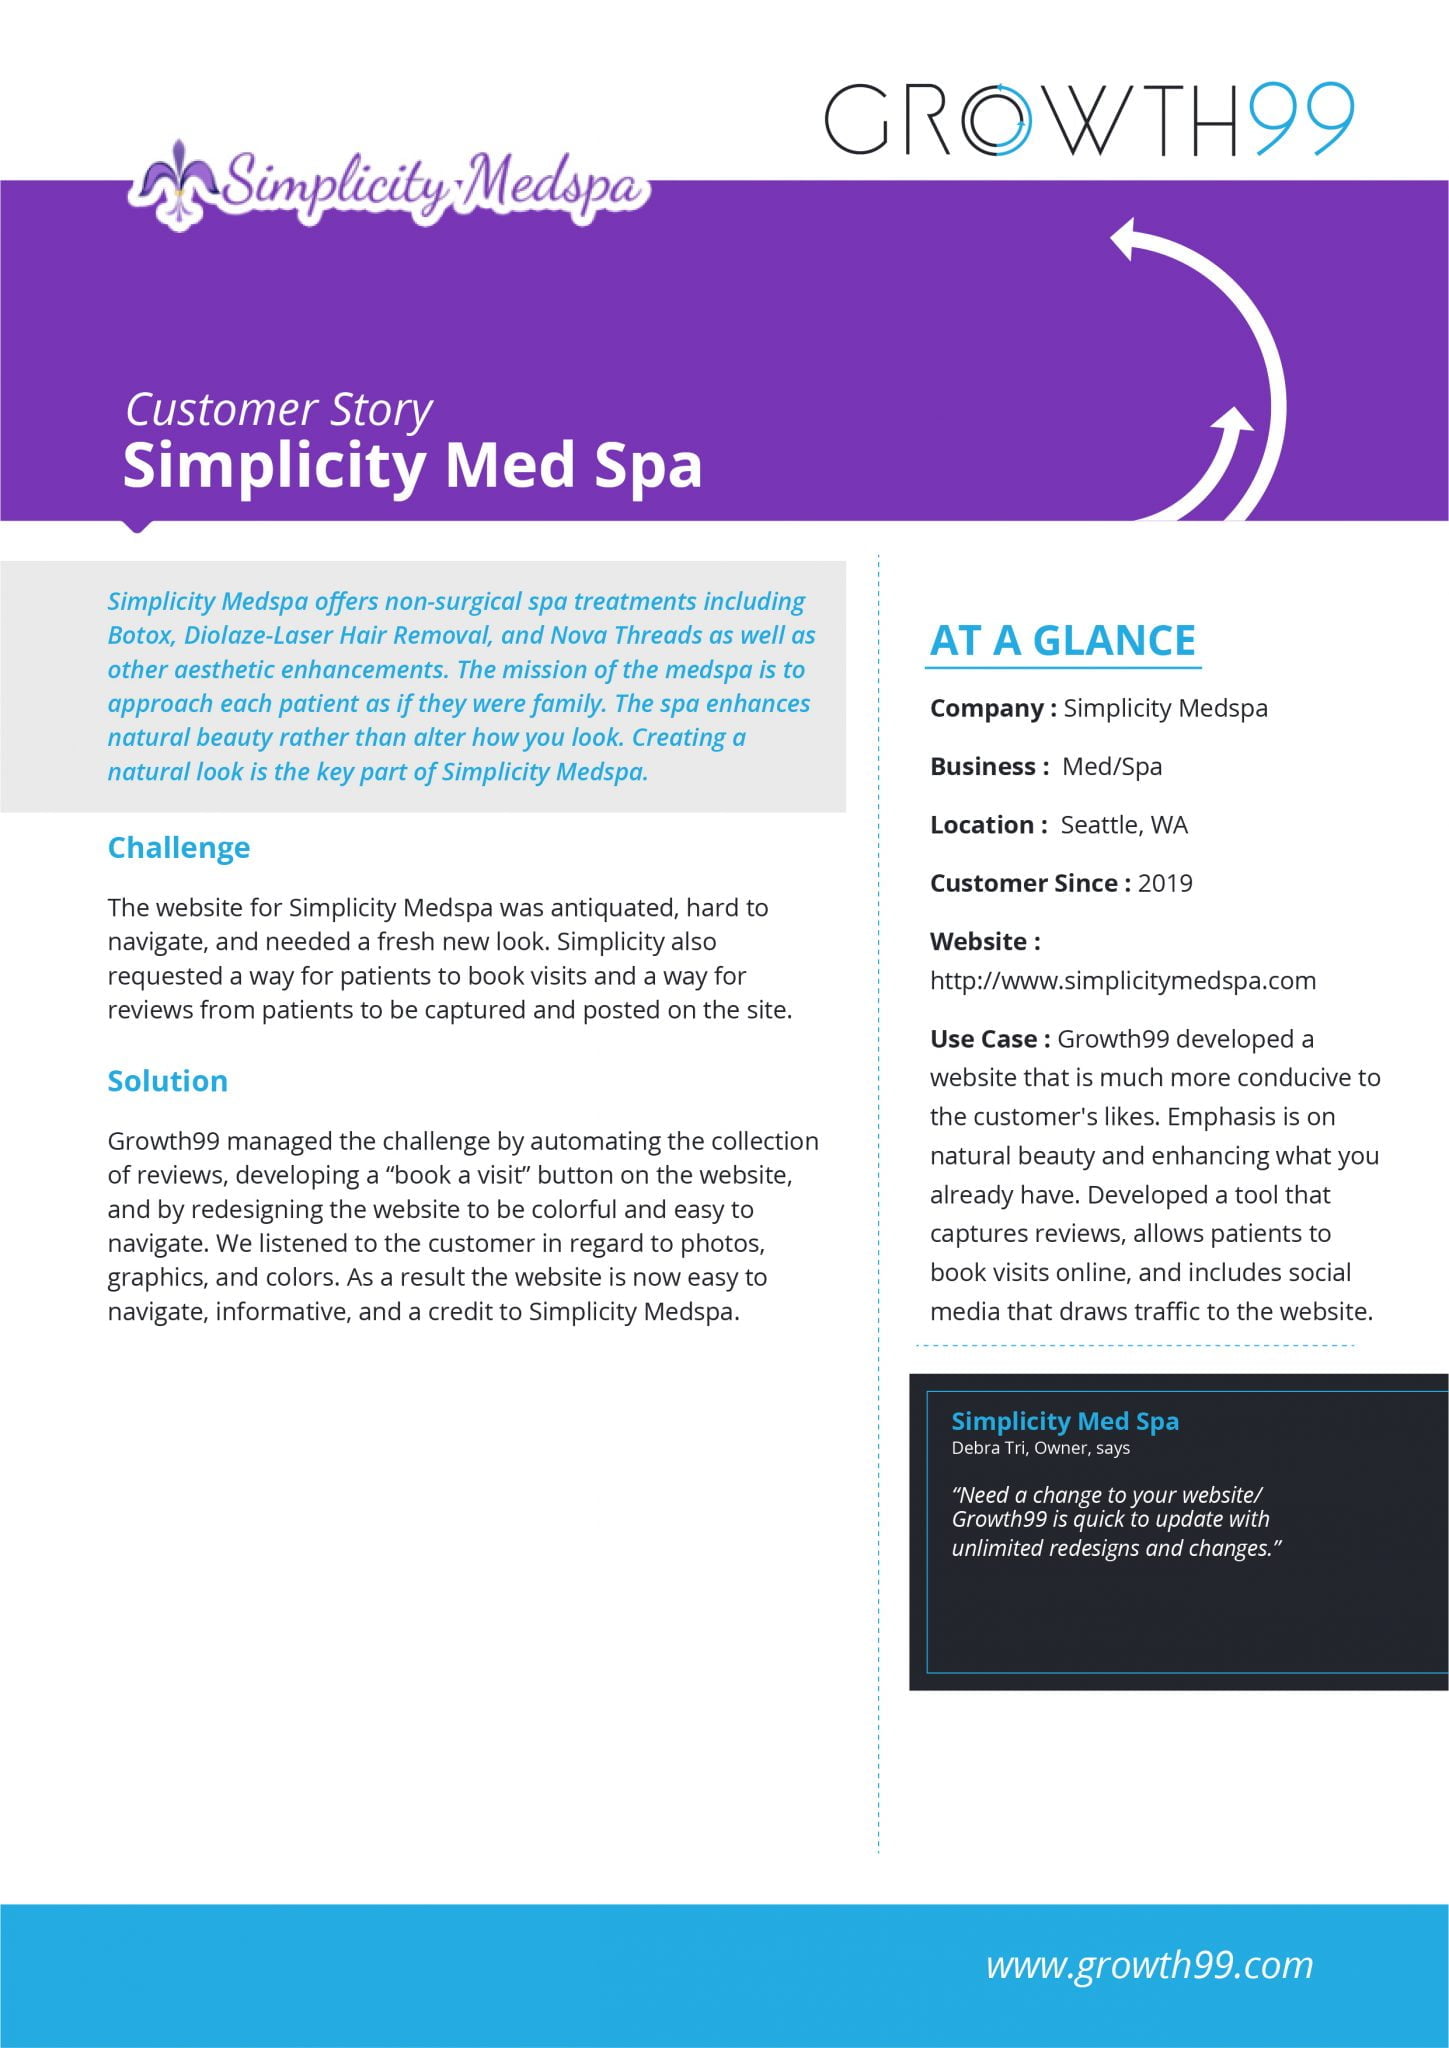 Simplicity Med Spa Case Study